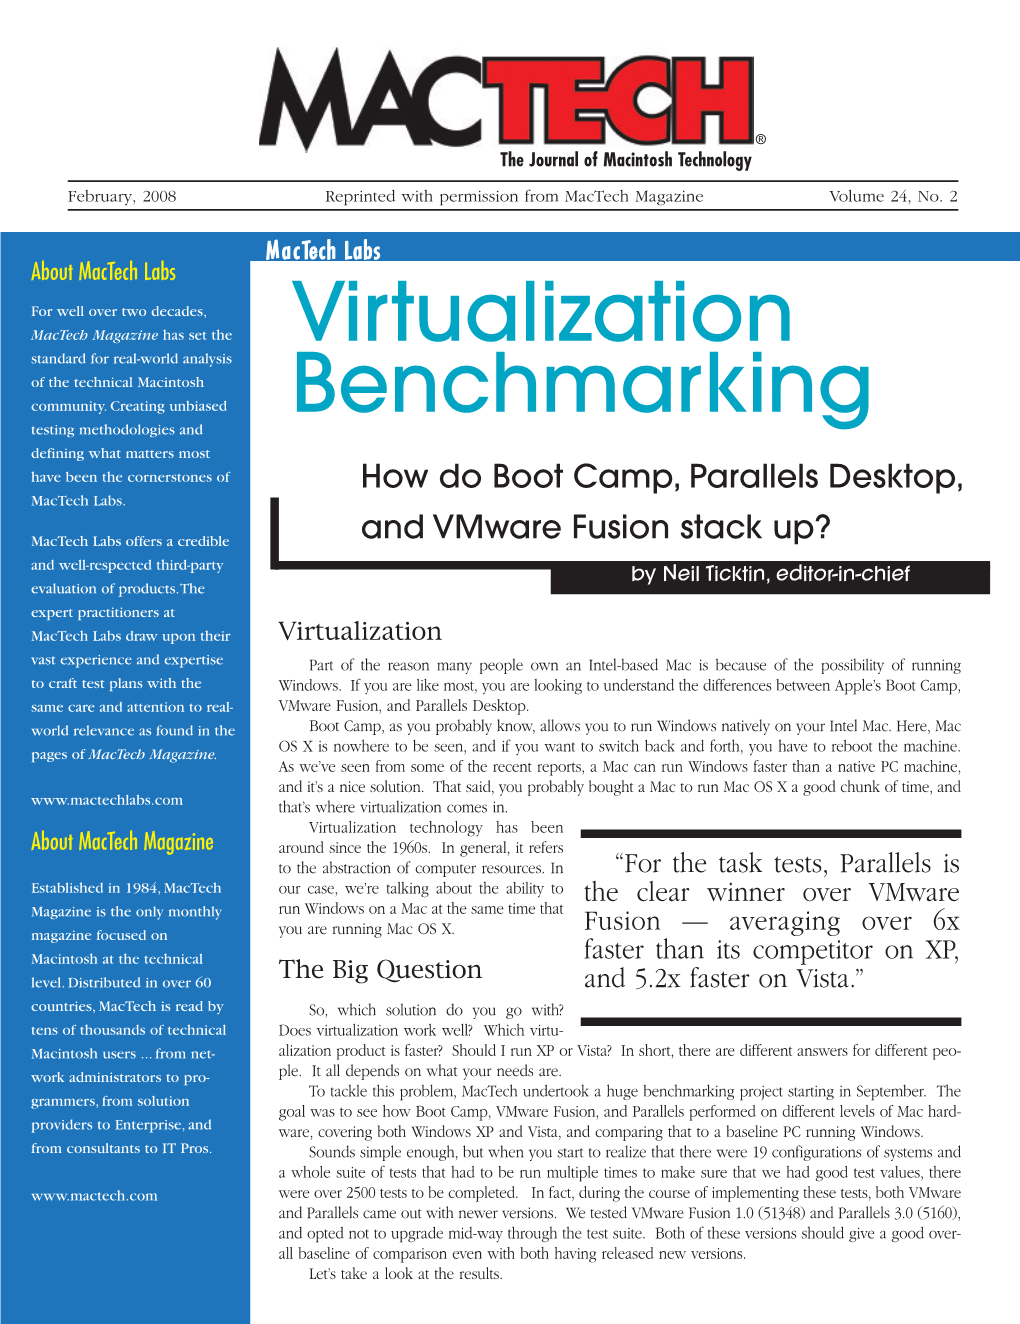 Virtualization Benchmarking